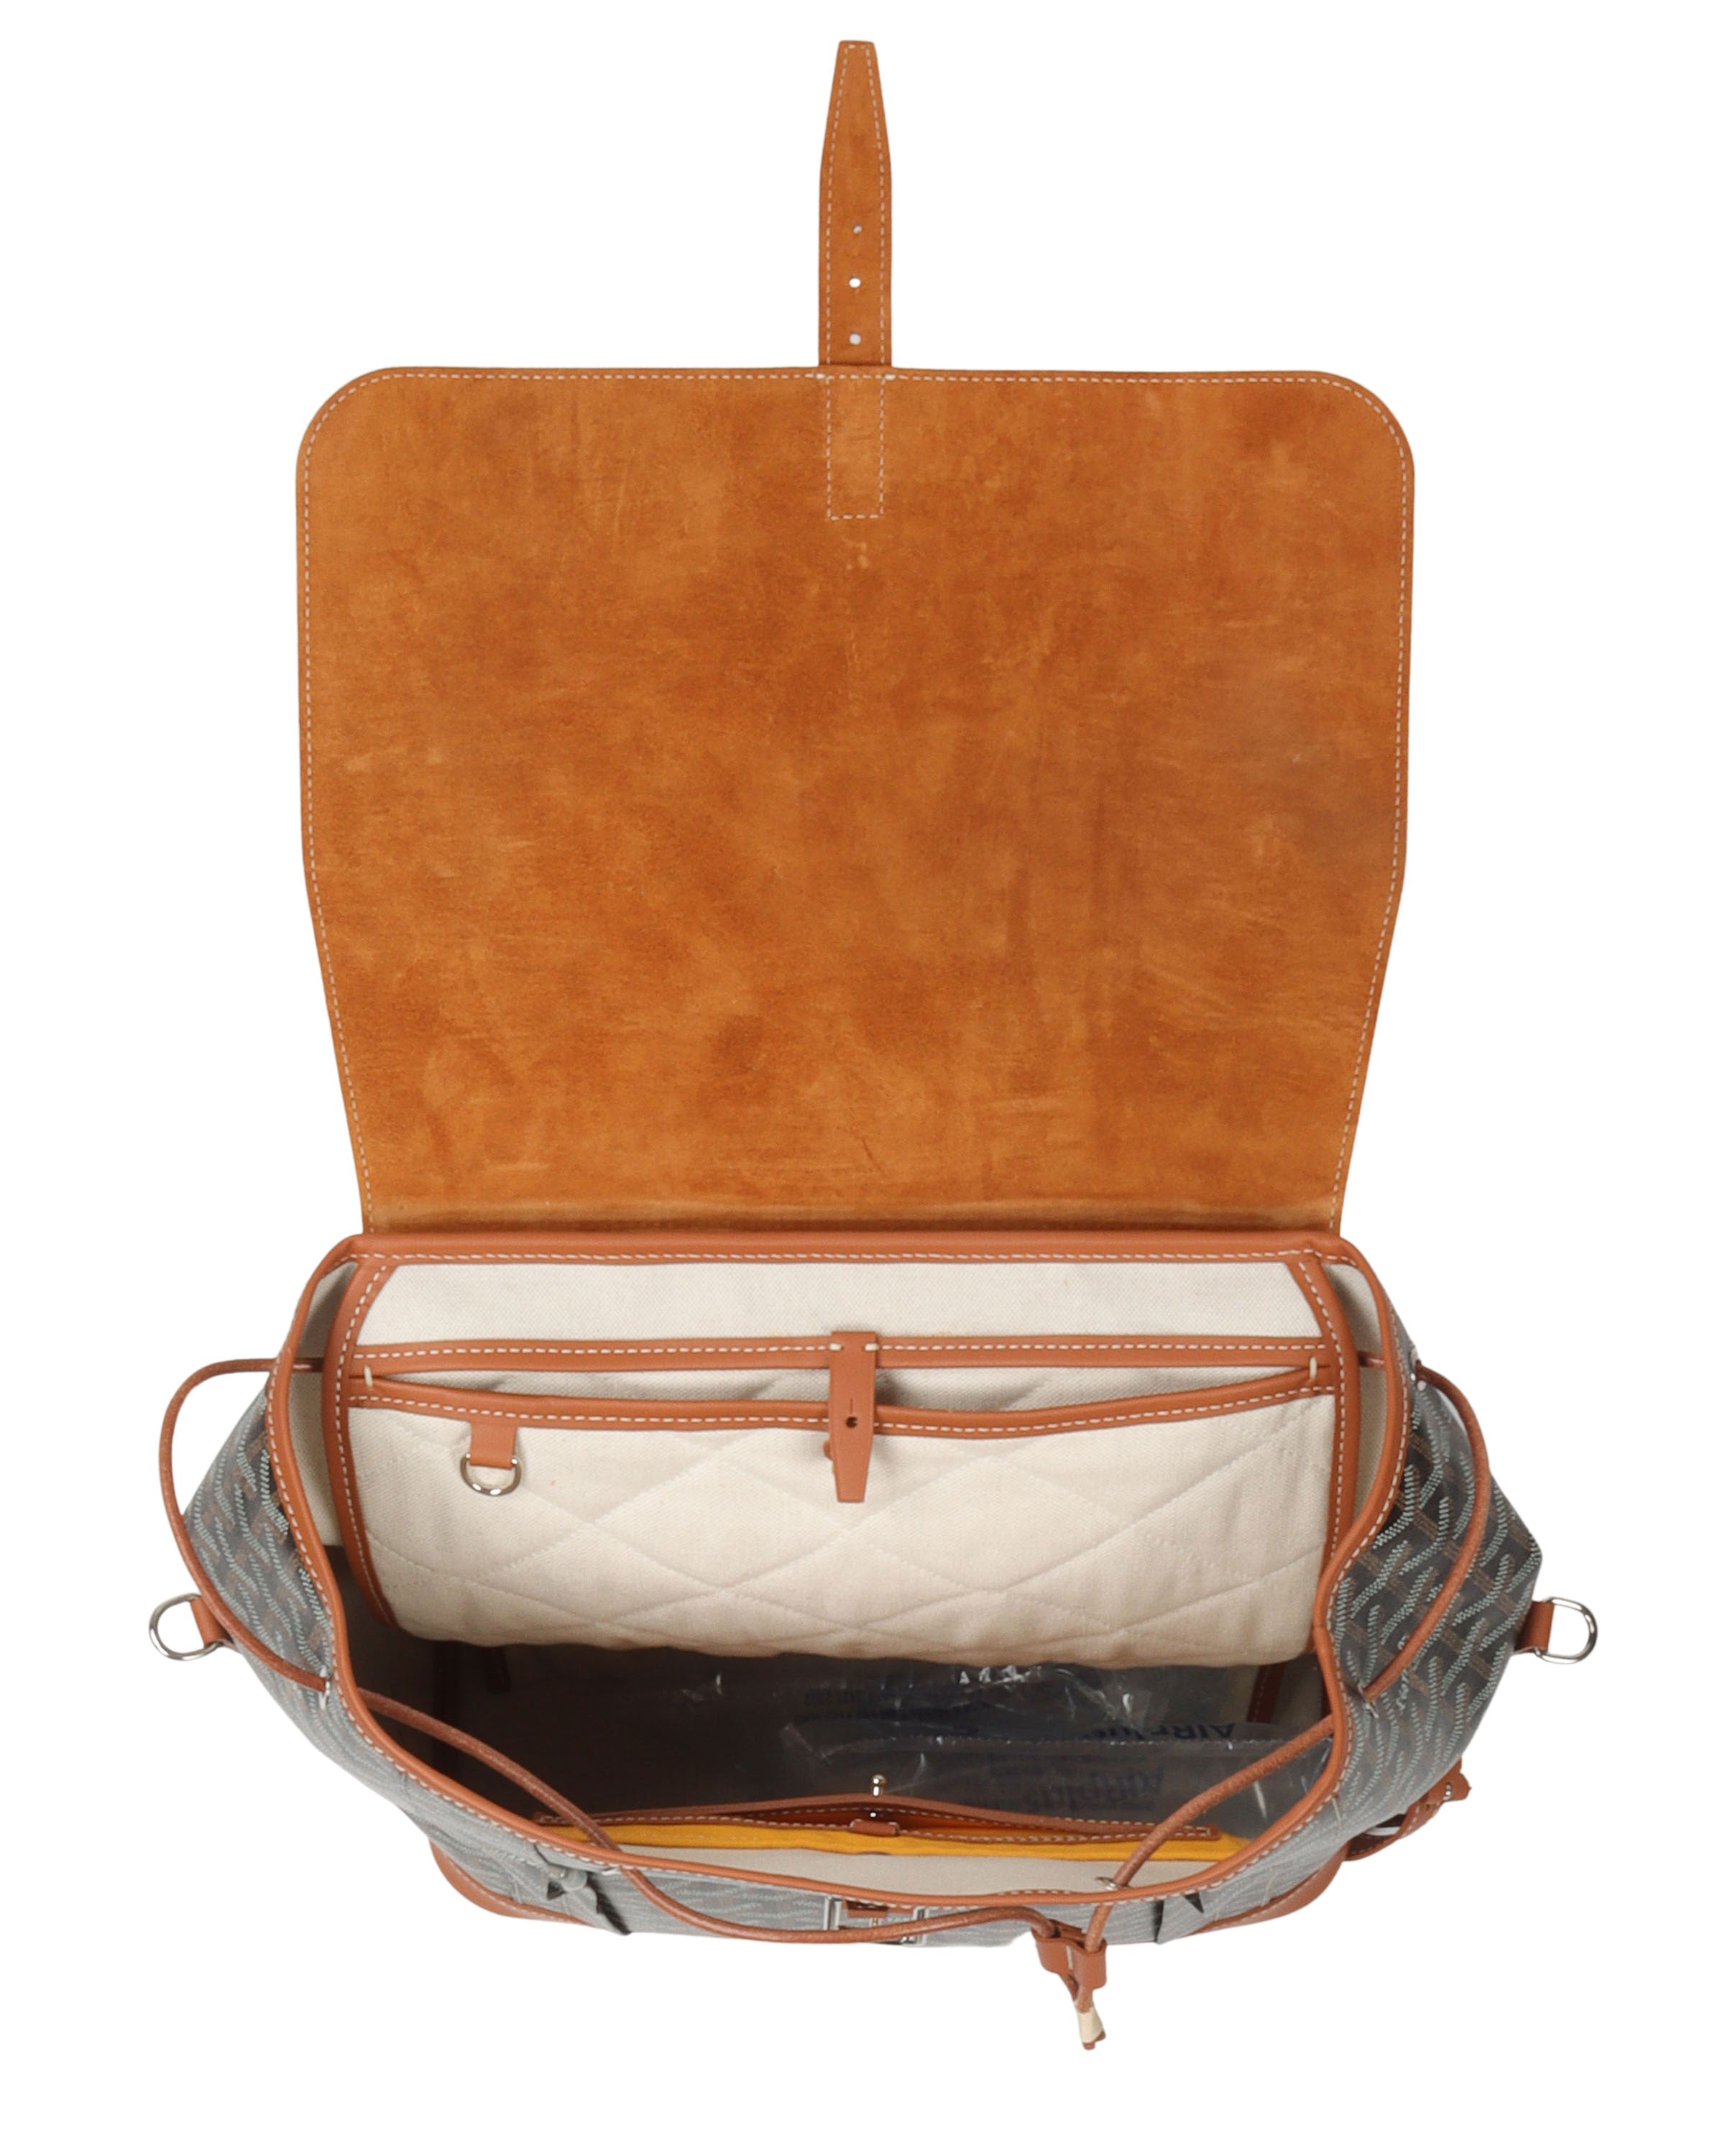 Goyard Alpin MM Backpack - Black Backpacks, Bags - GOY36803